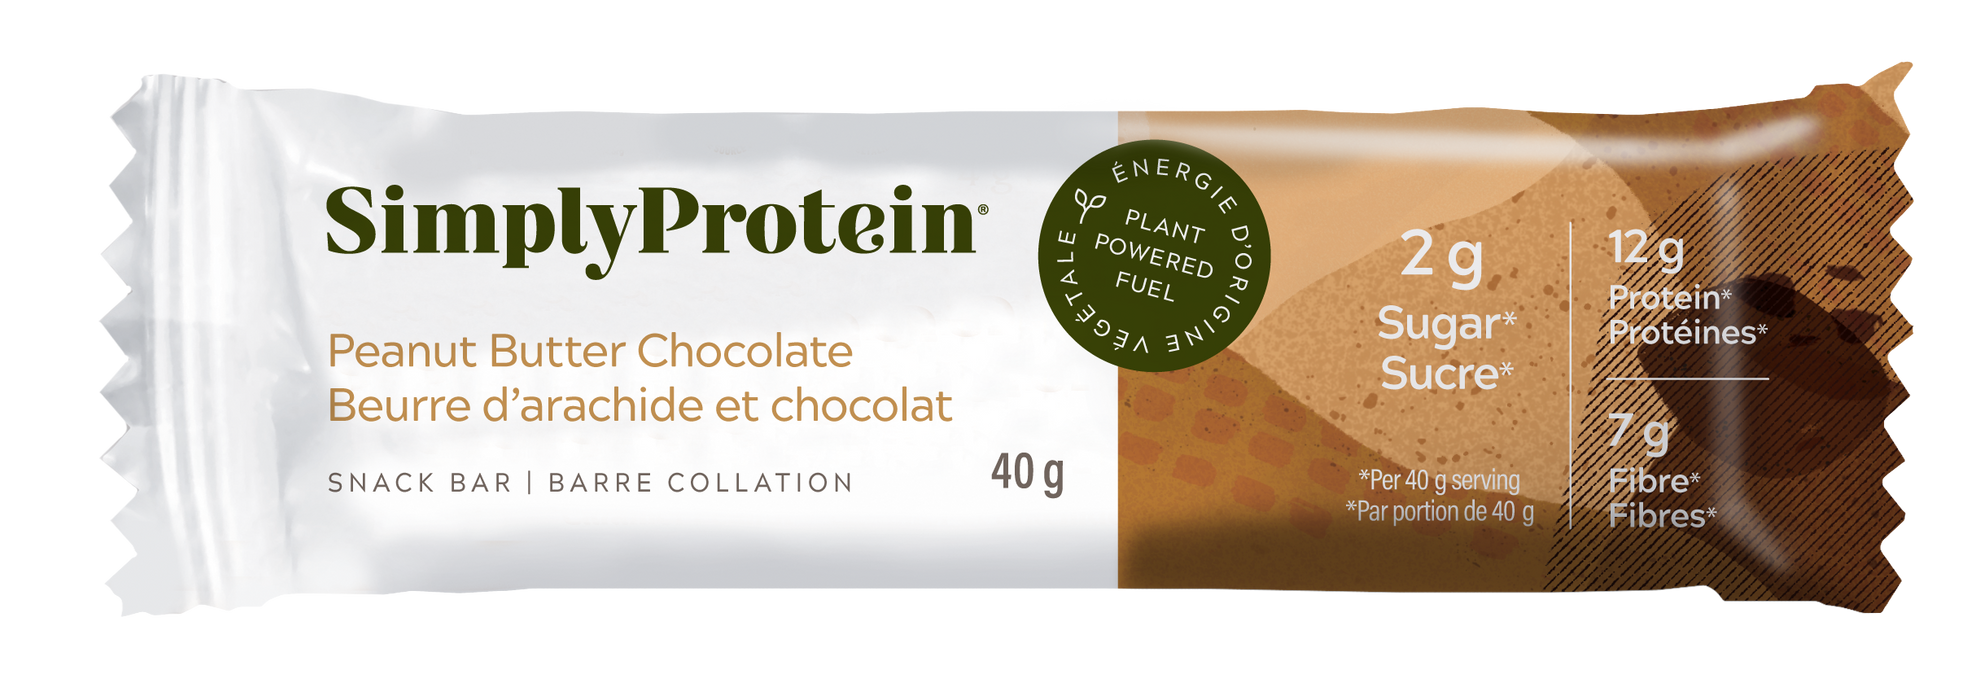 Simply - Peanut Butter Chocolate Bar, 40g